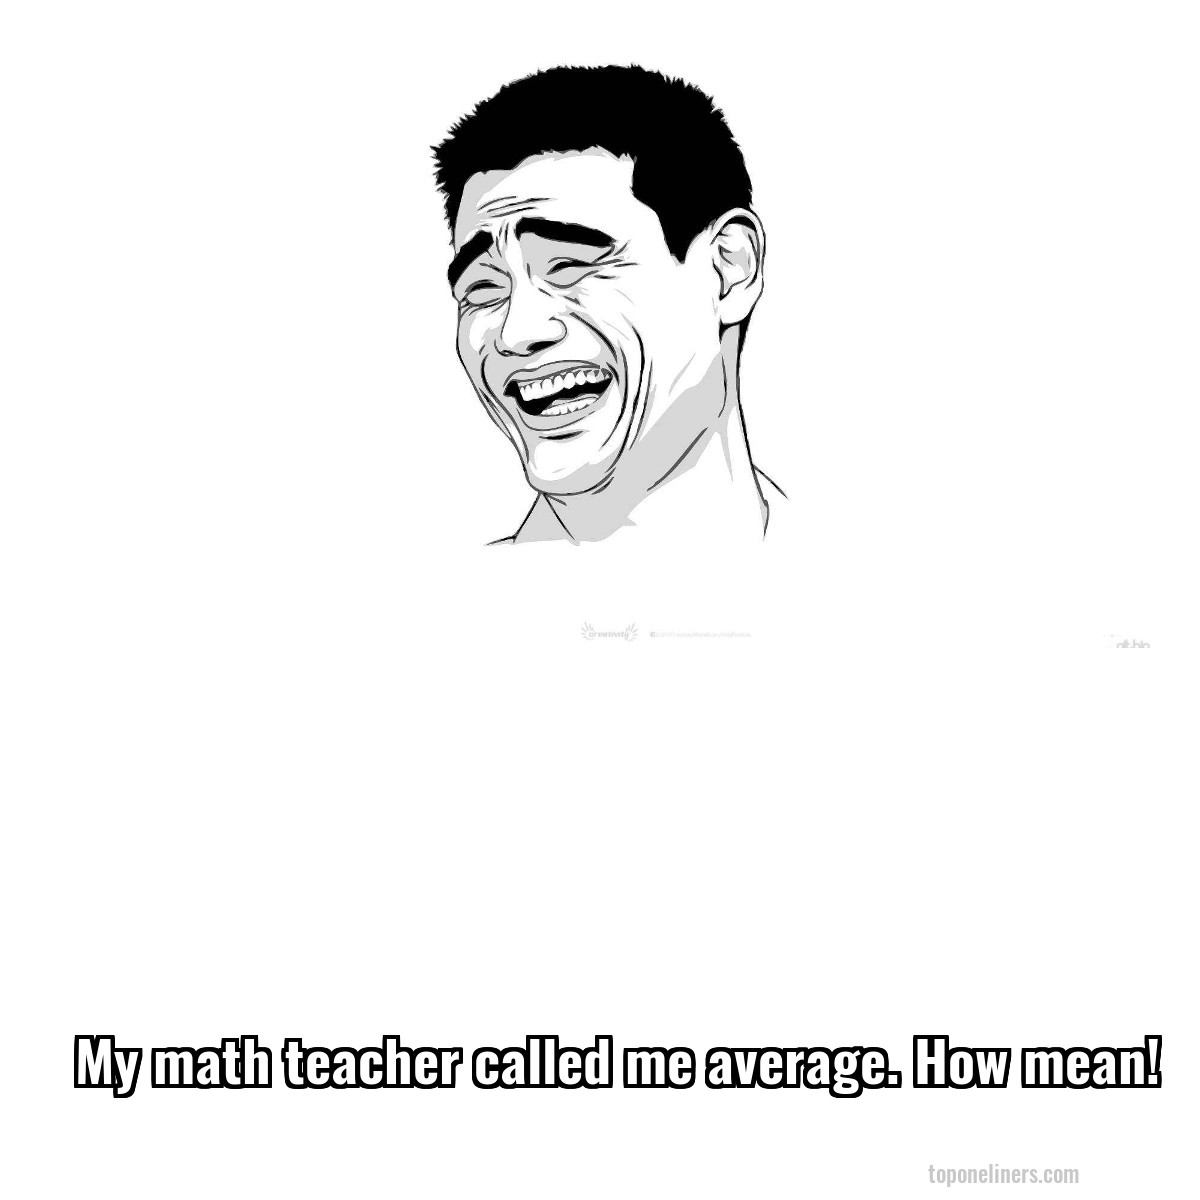 My math teacher called me average. How mean!
